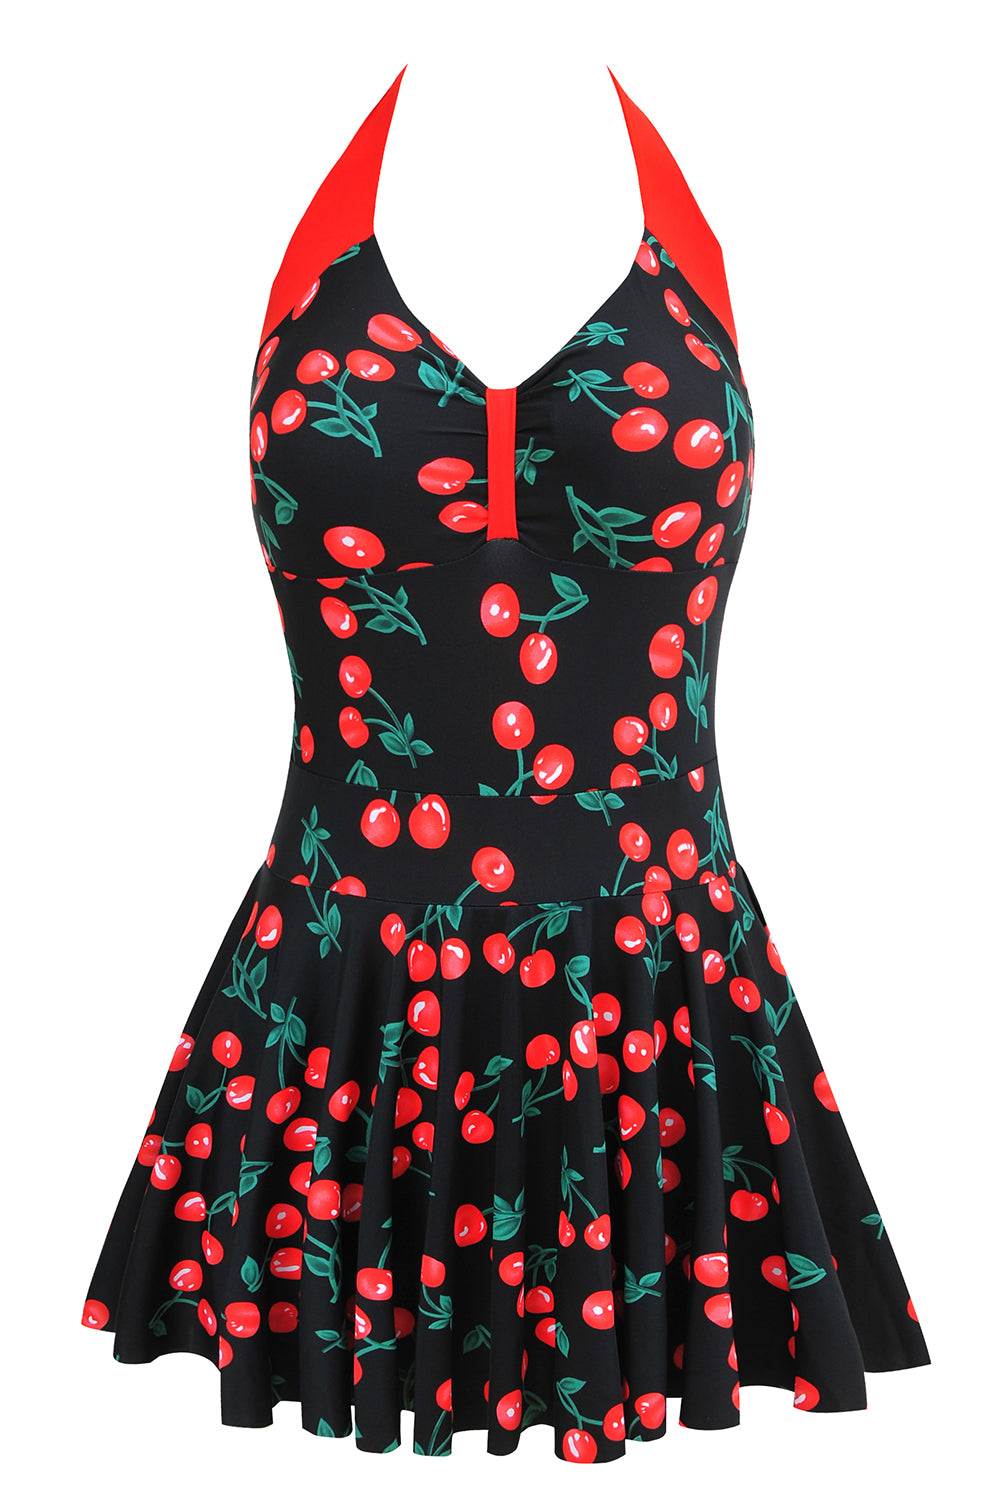 Plus Size Black and Red Cherry Printed Swimwear